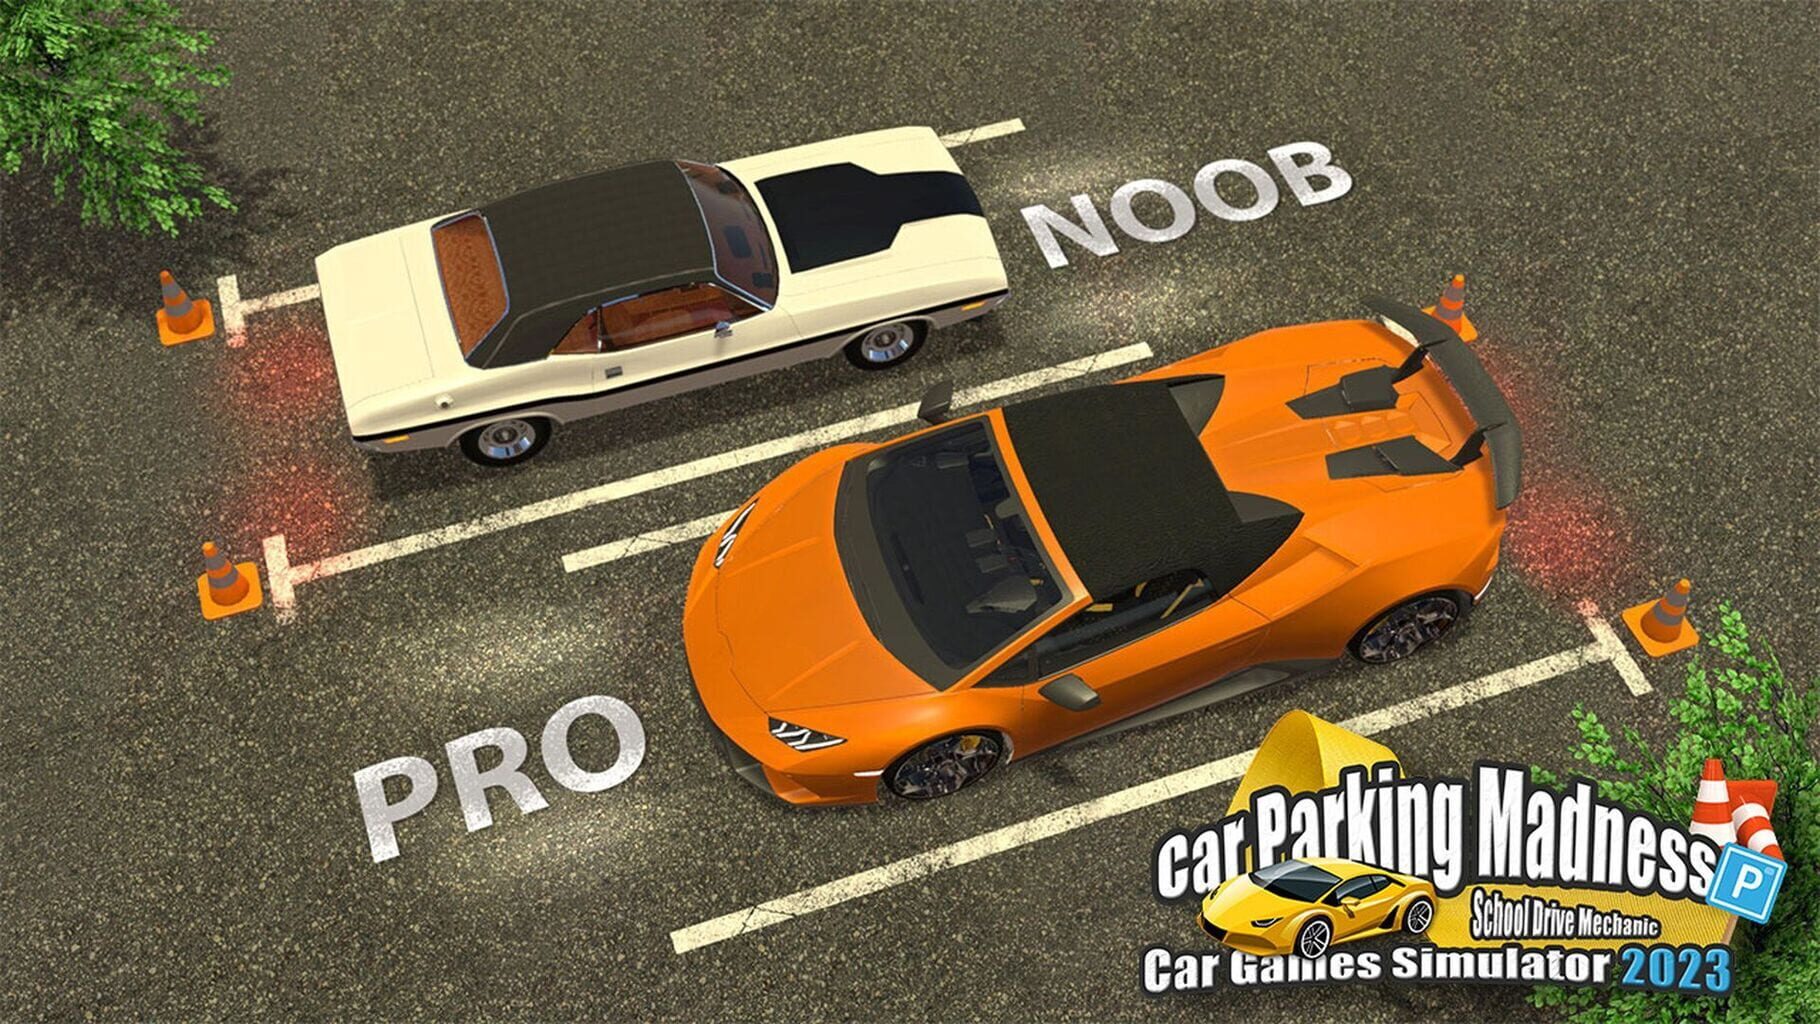 Car Parking Madness School Drive Mechanic Car Games Simulator 2023 artwork